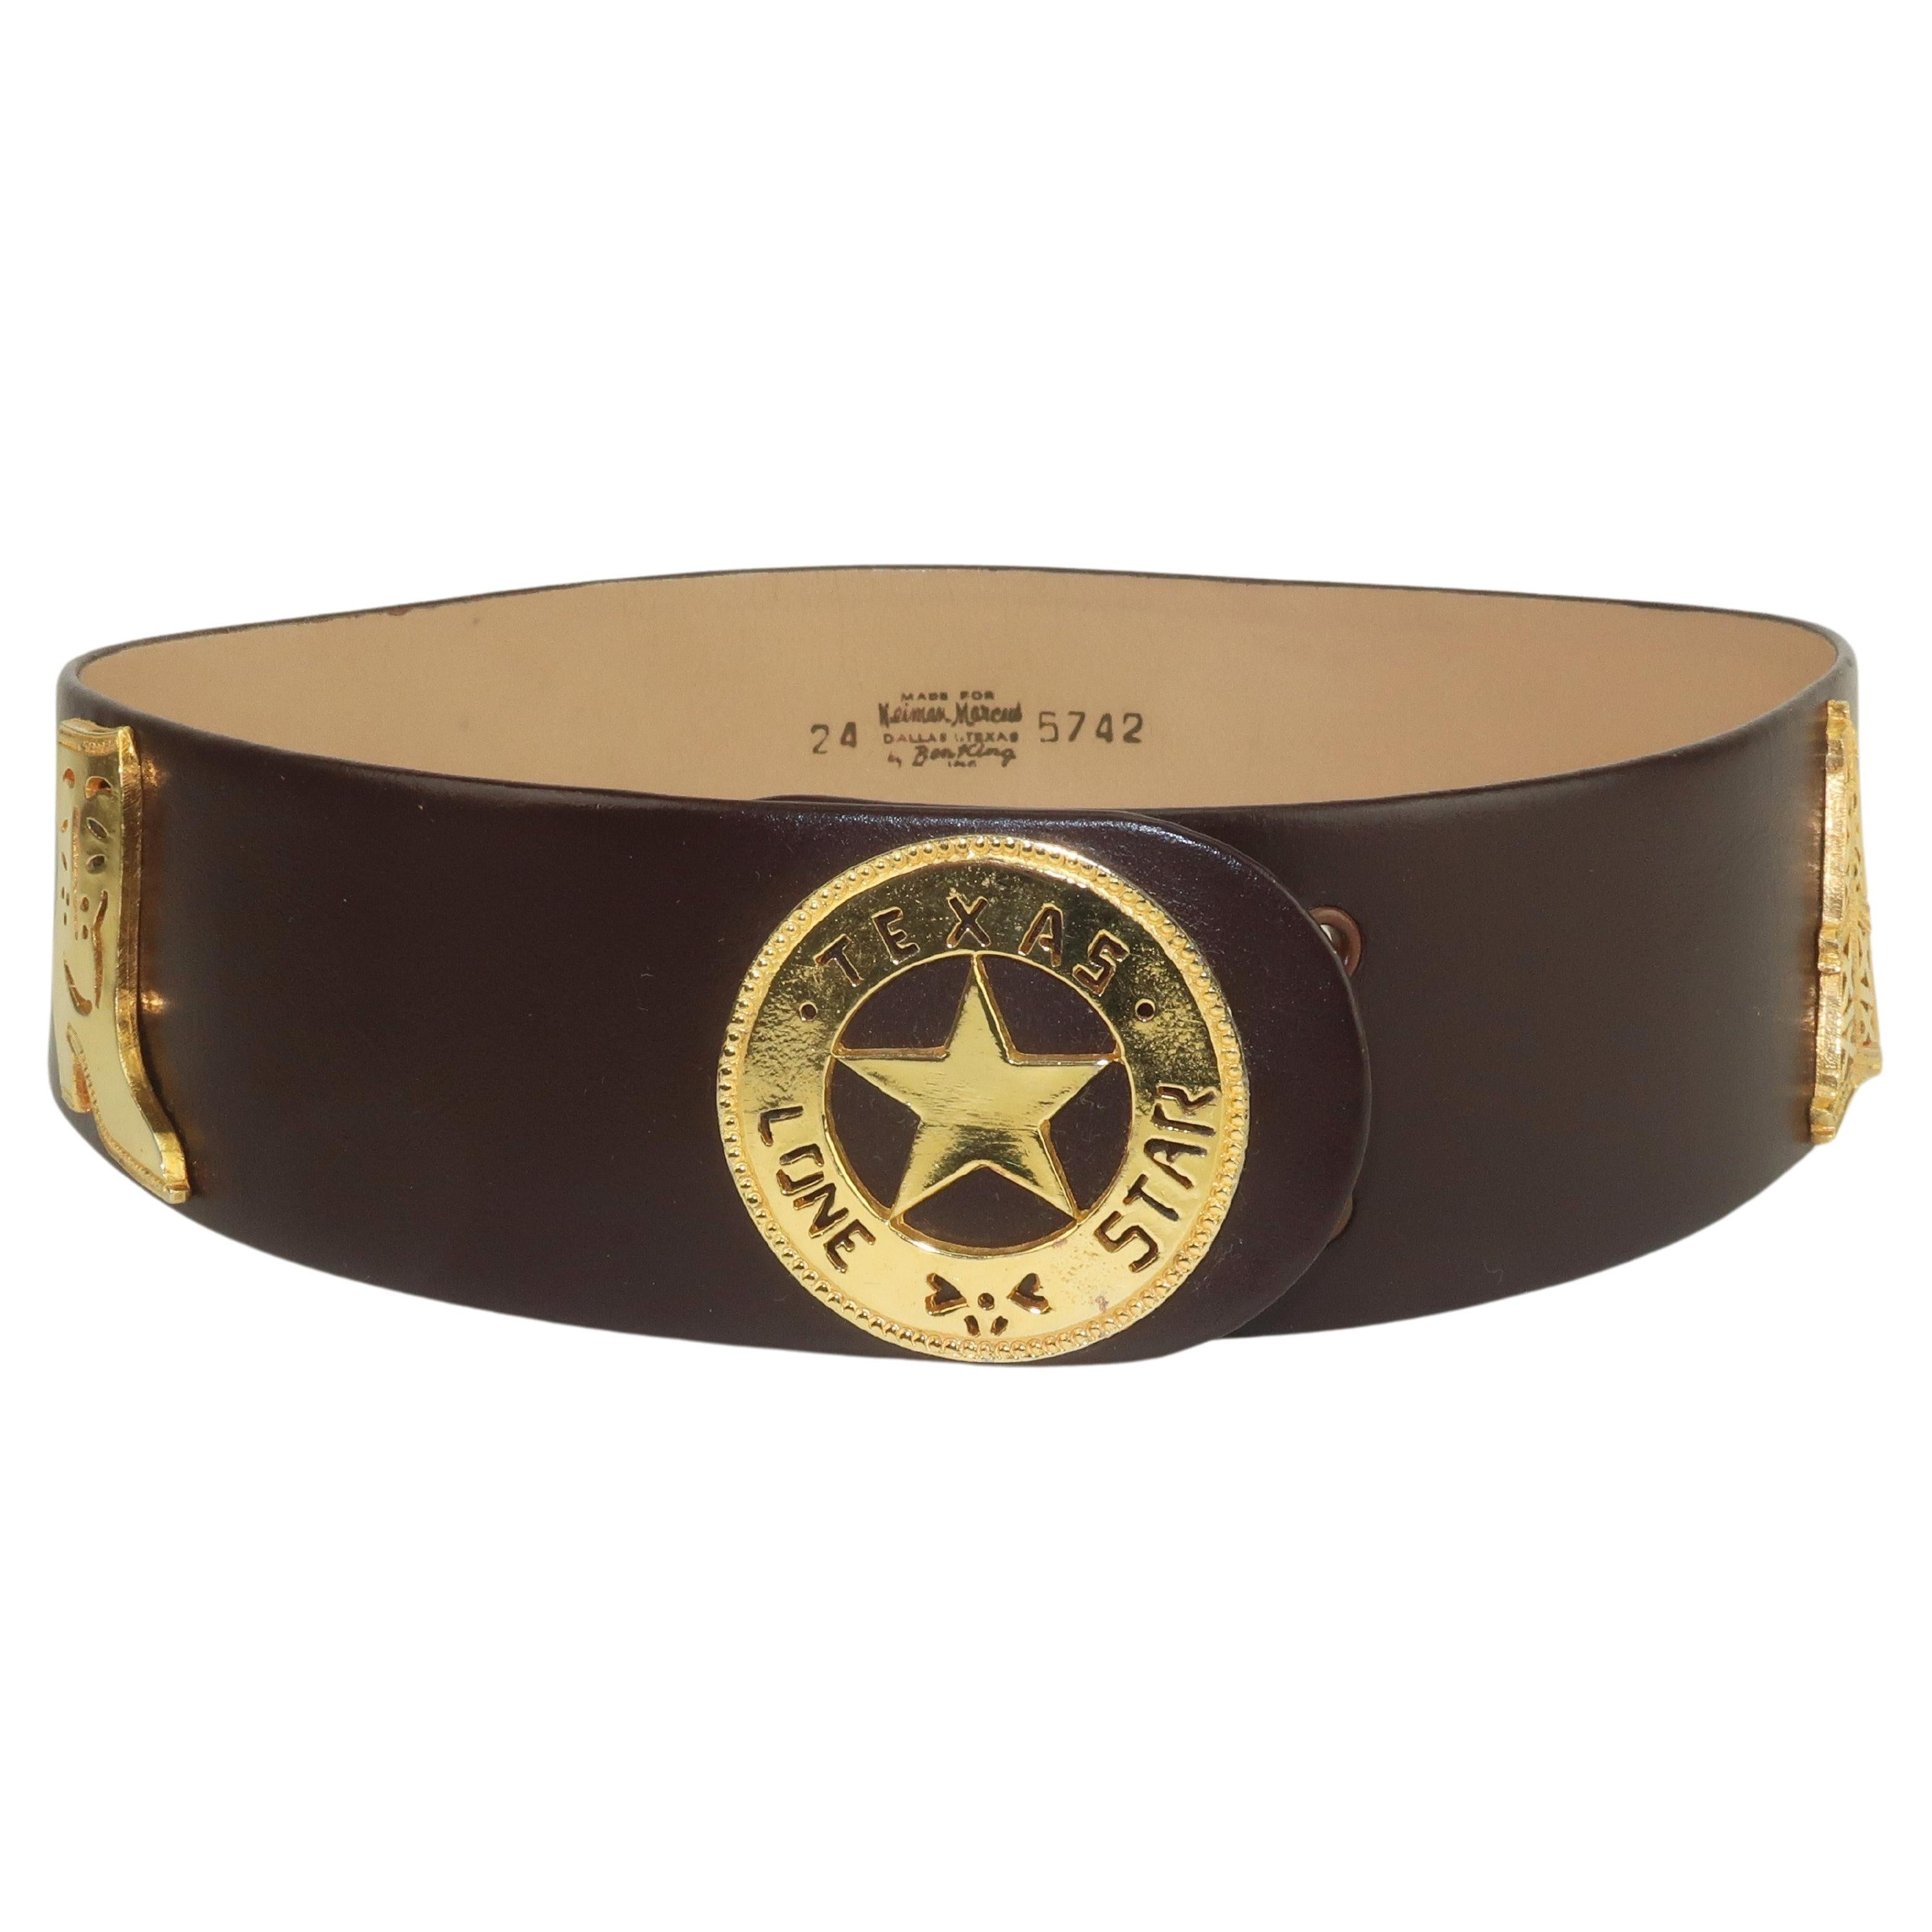 Neiman Marcus Texas Novelty Brown Leather Belt, 1960's